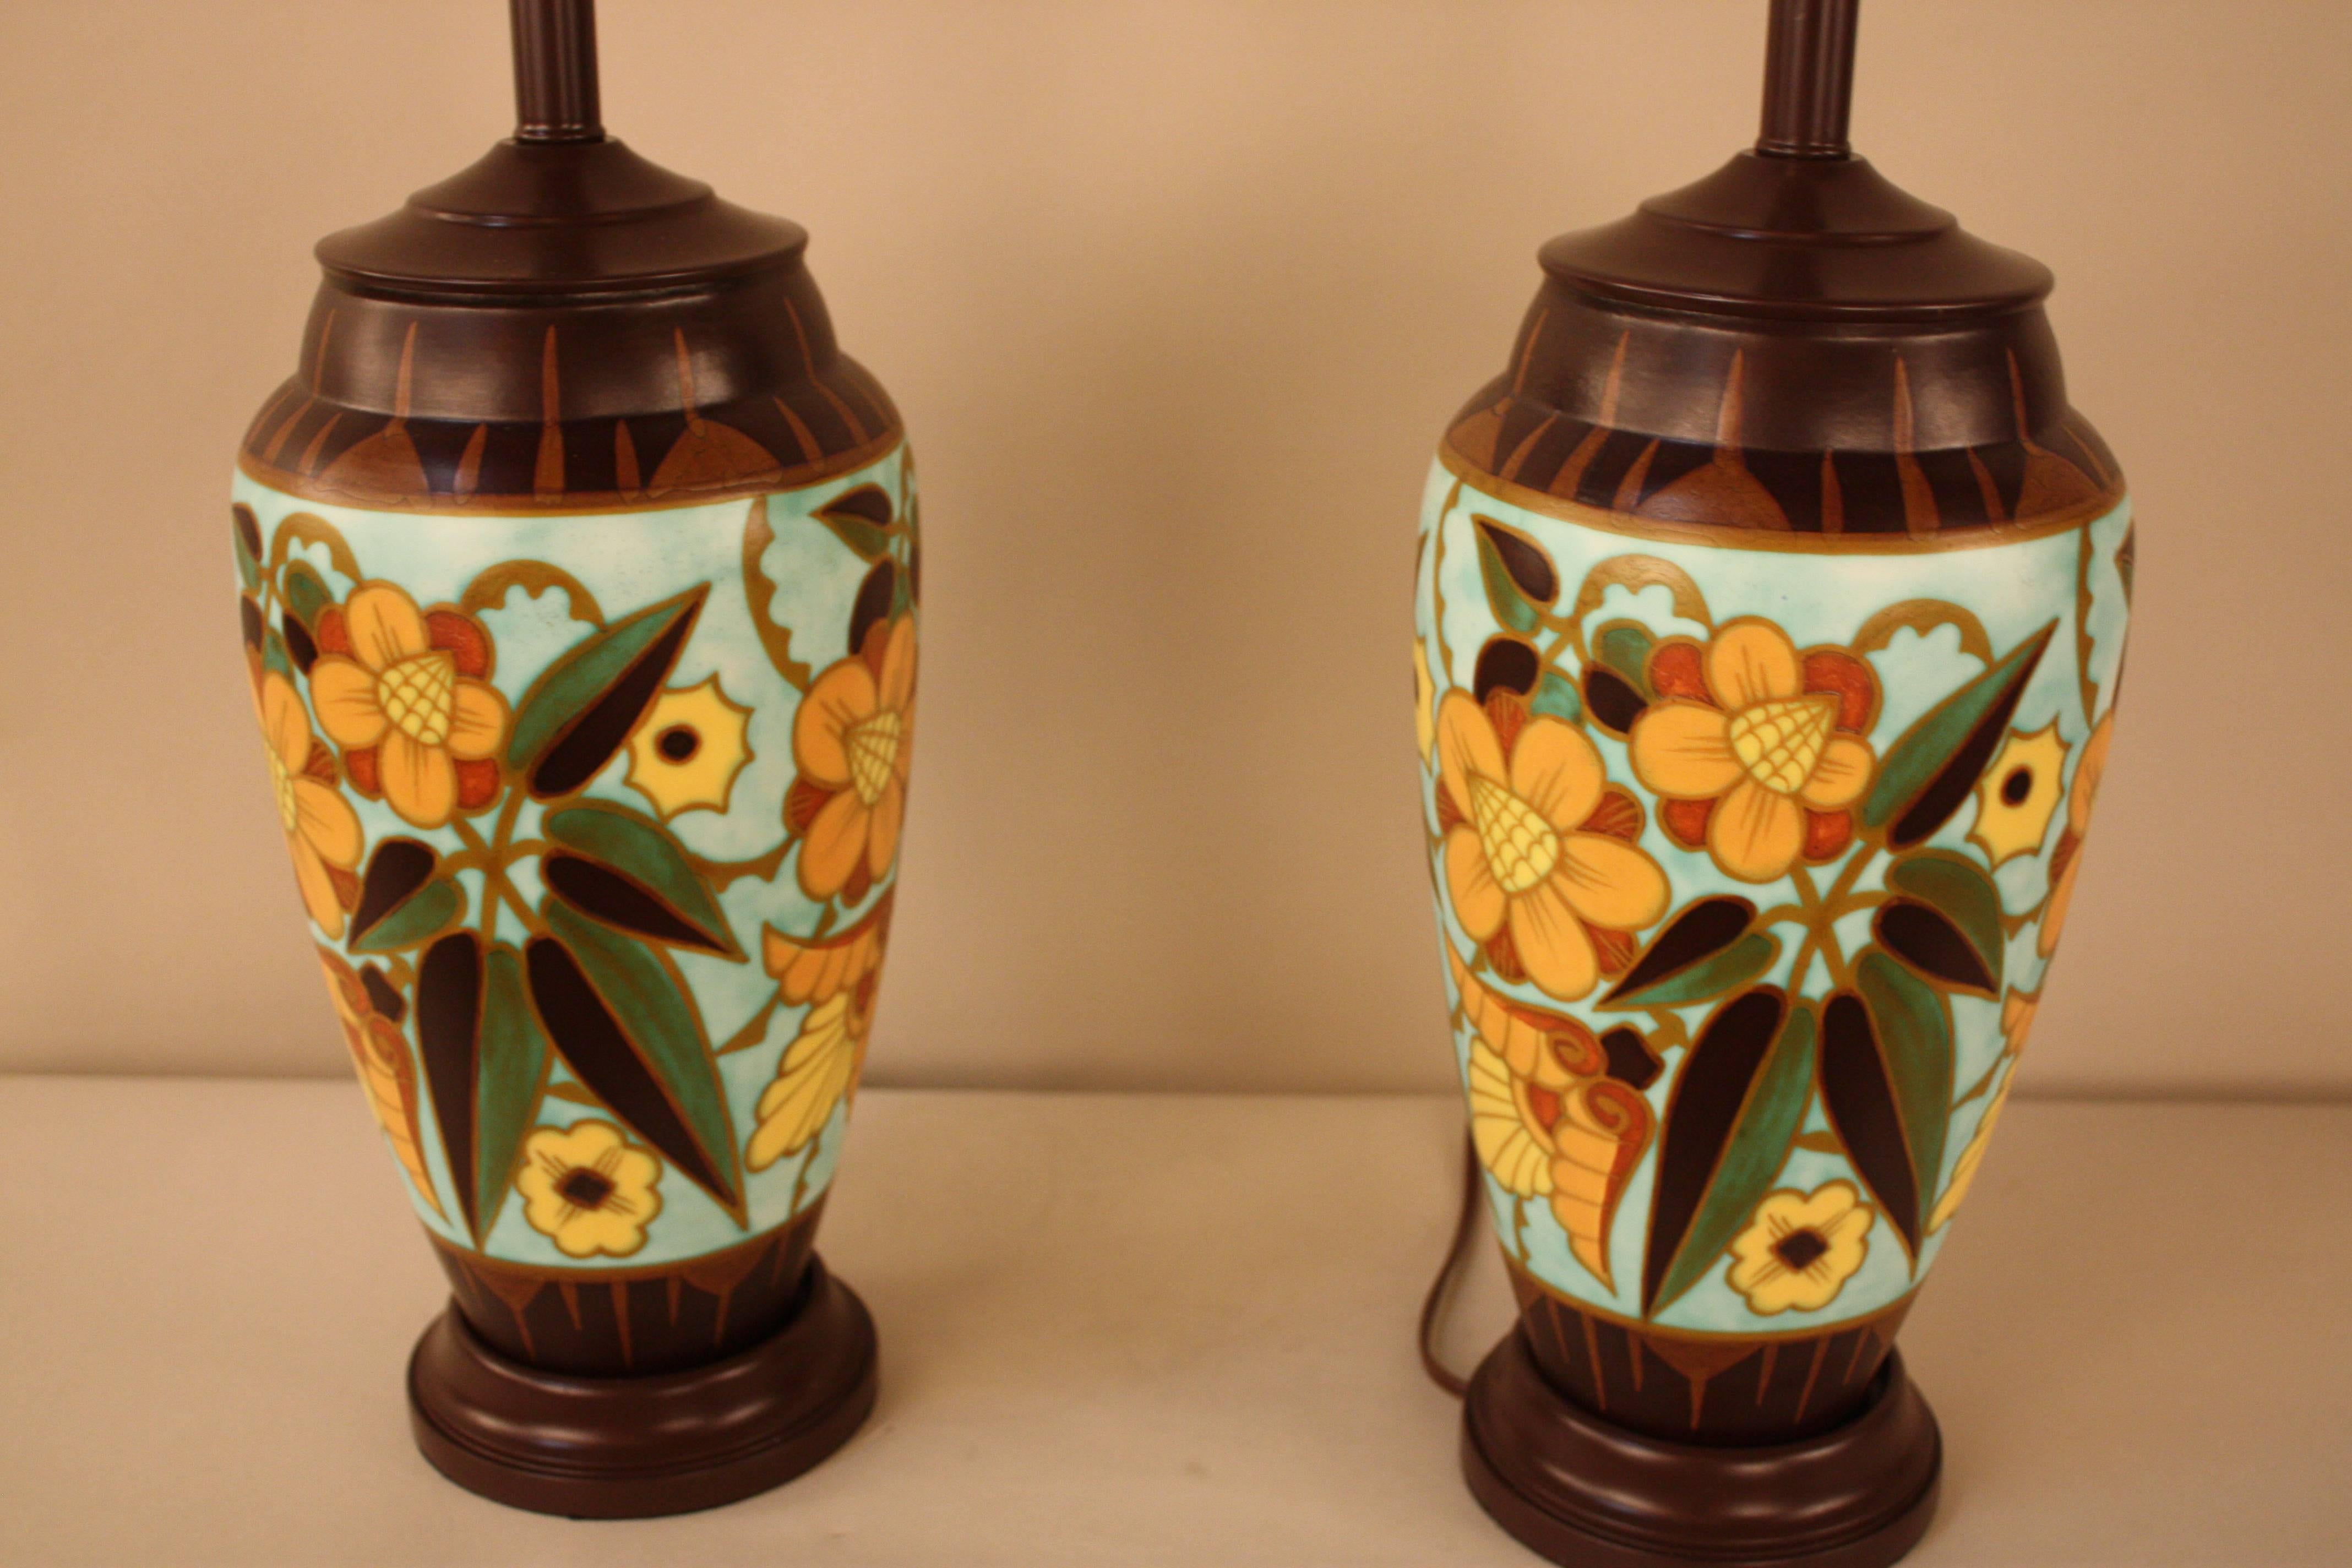 Pottery Beautiful Pair of Art Deco Table Lamps by Boch Freres Keramis, Belgium